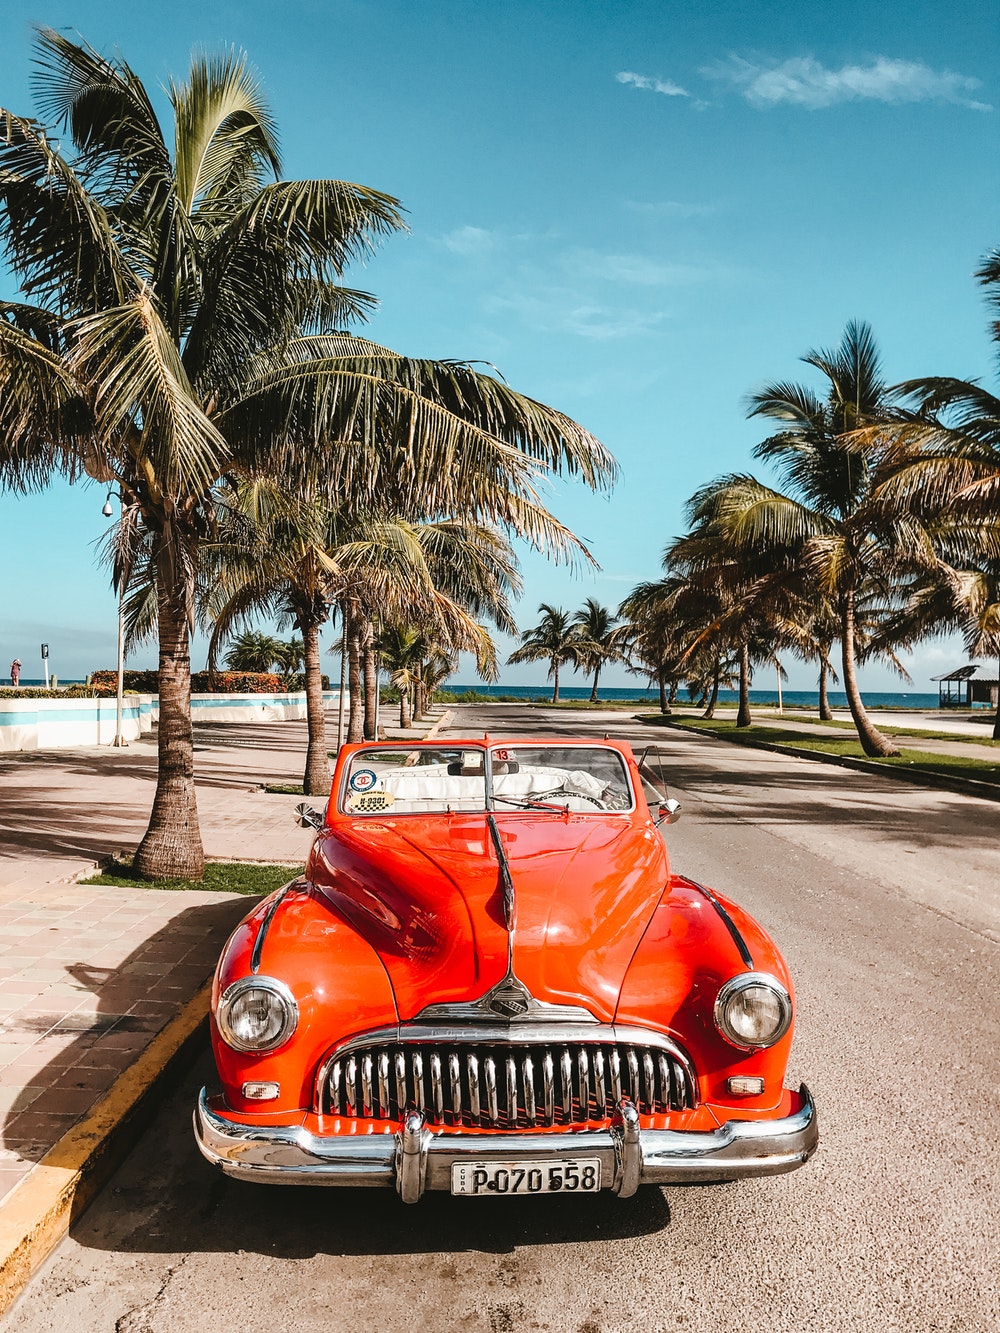 Beautiful Cuba Pictures Image